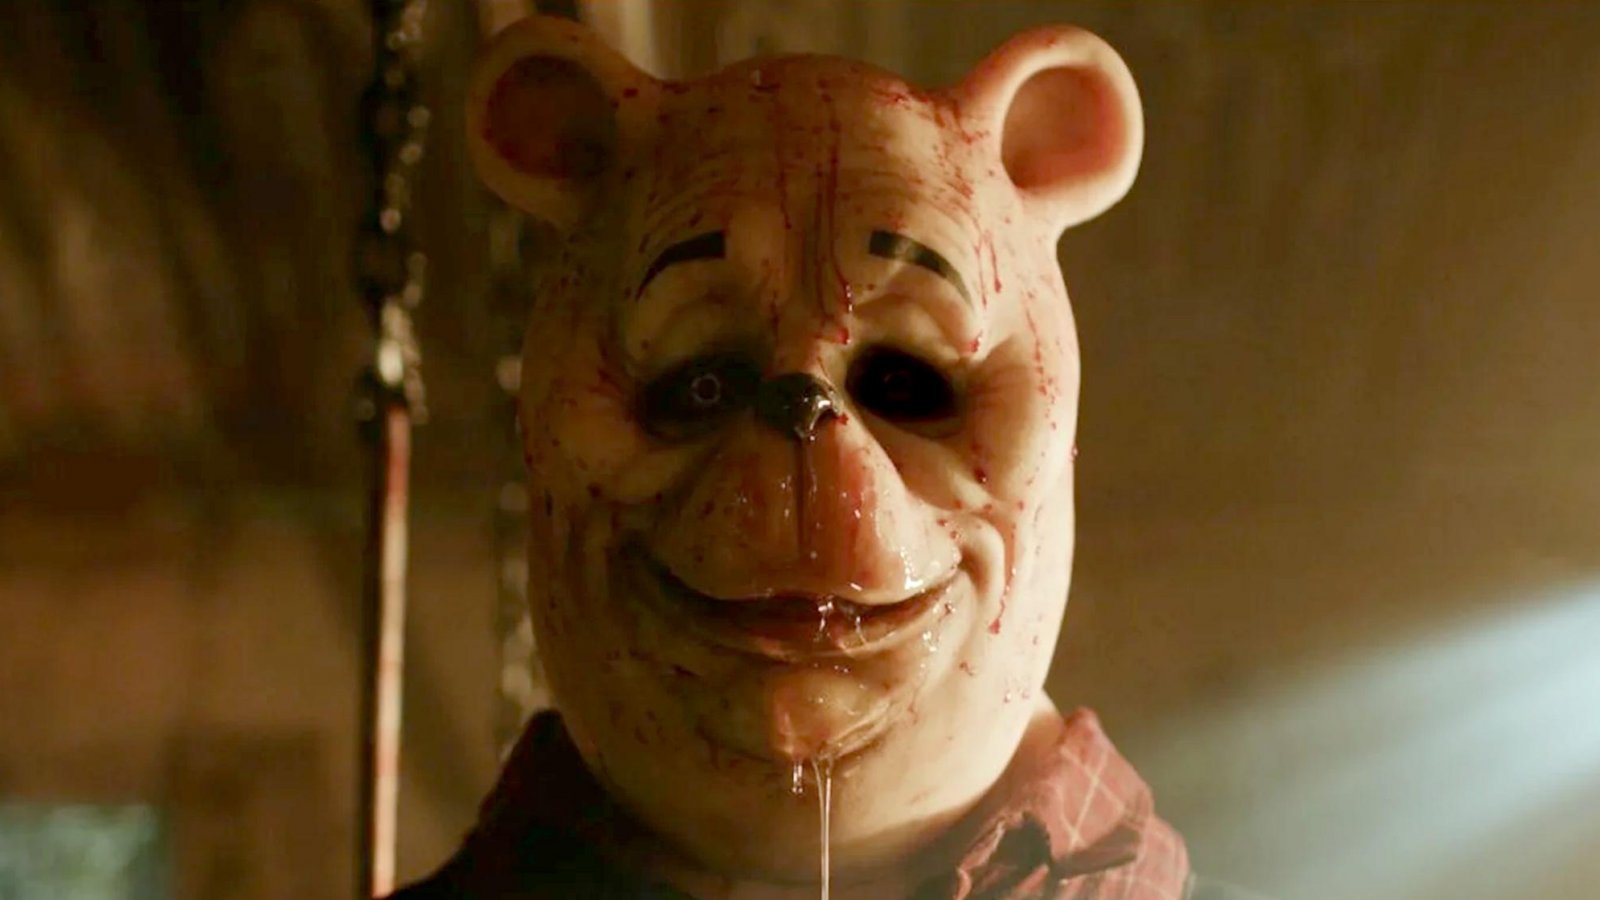 Winnie-the-Pooh - Sangue e miele 3 è confermato, insieme a un 'Avenger horror dei mostri'